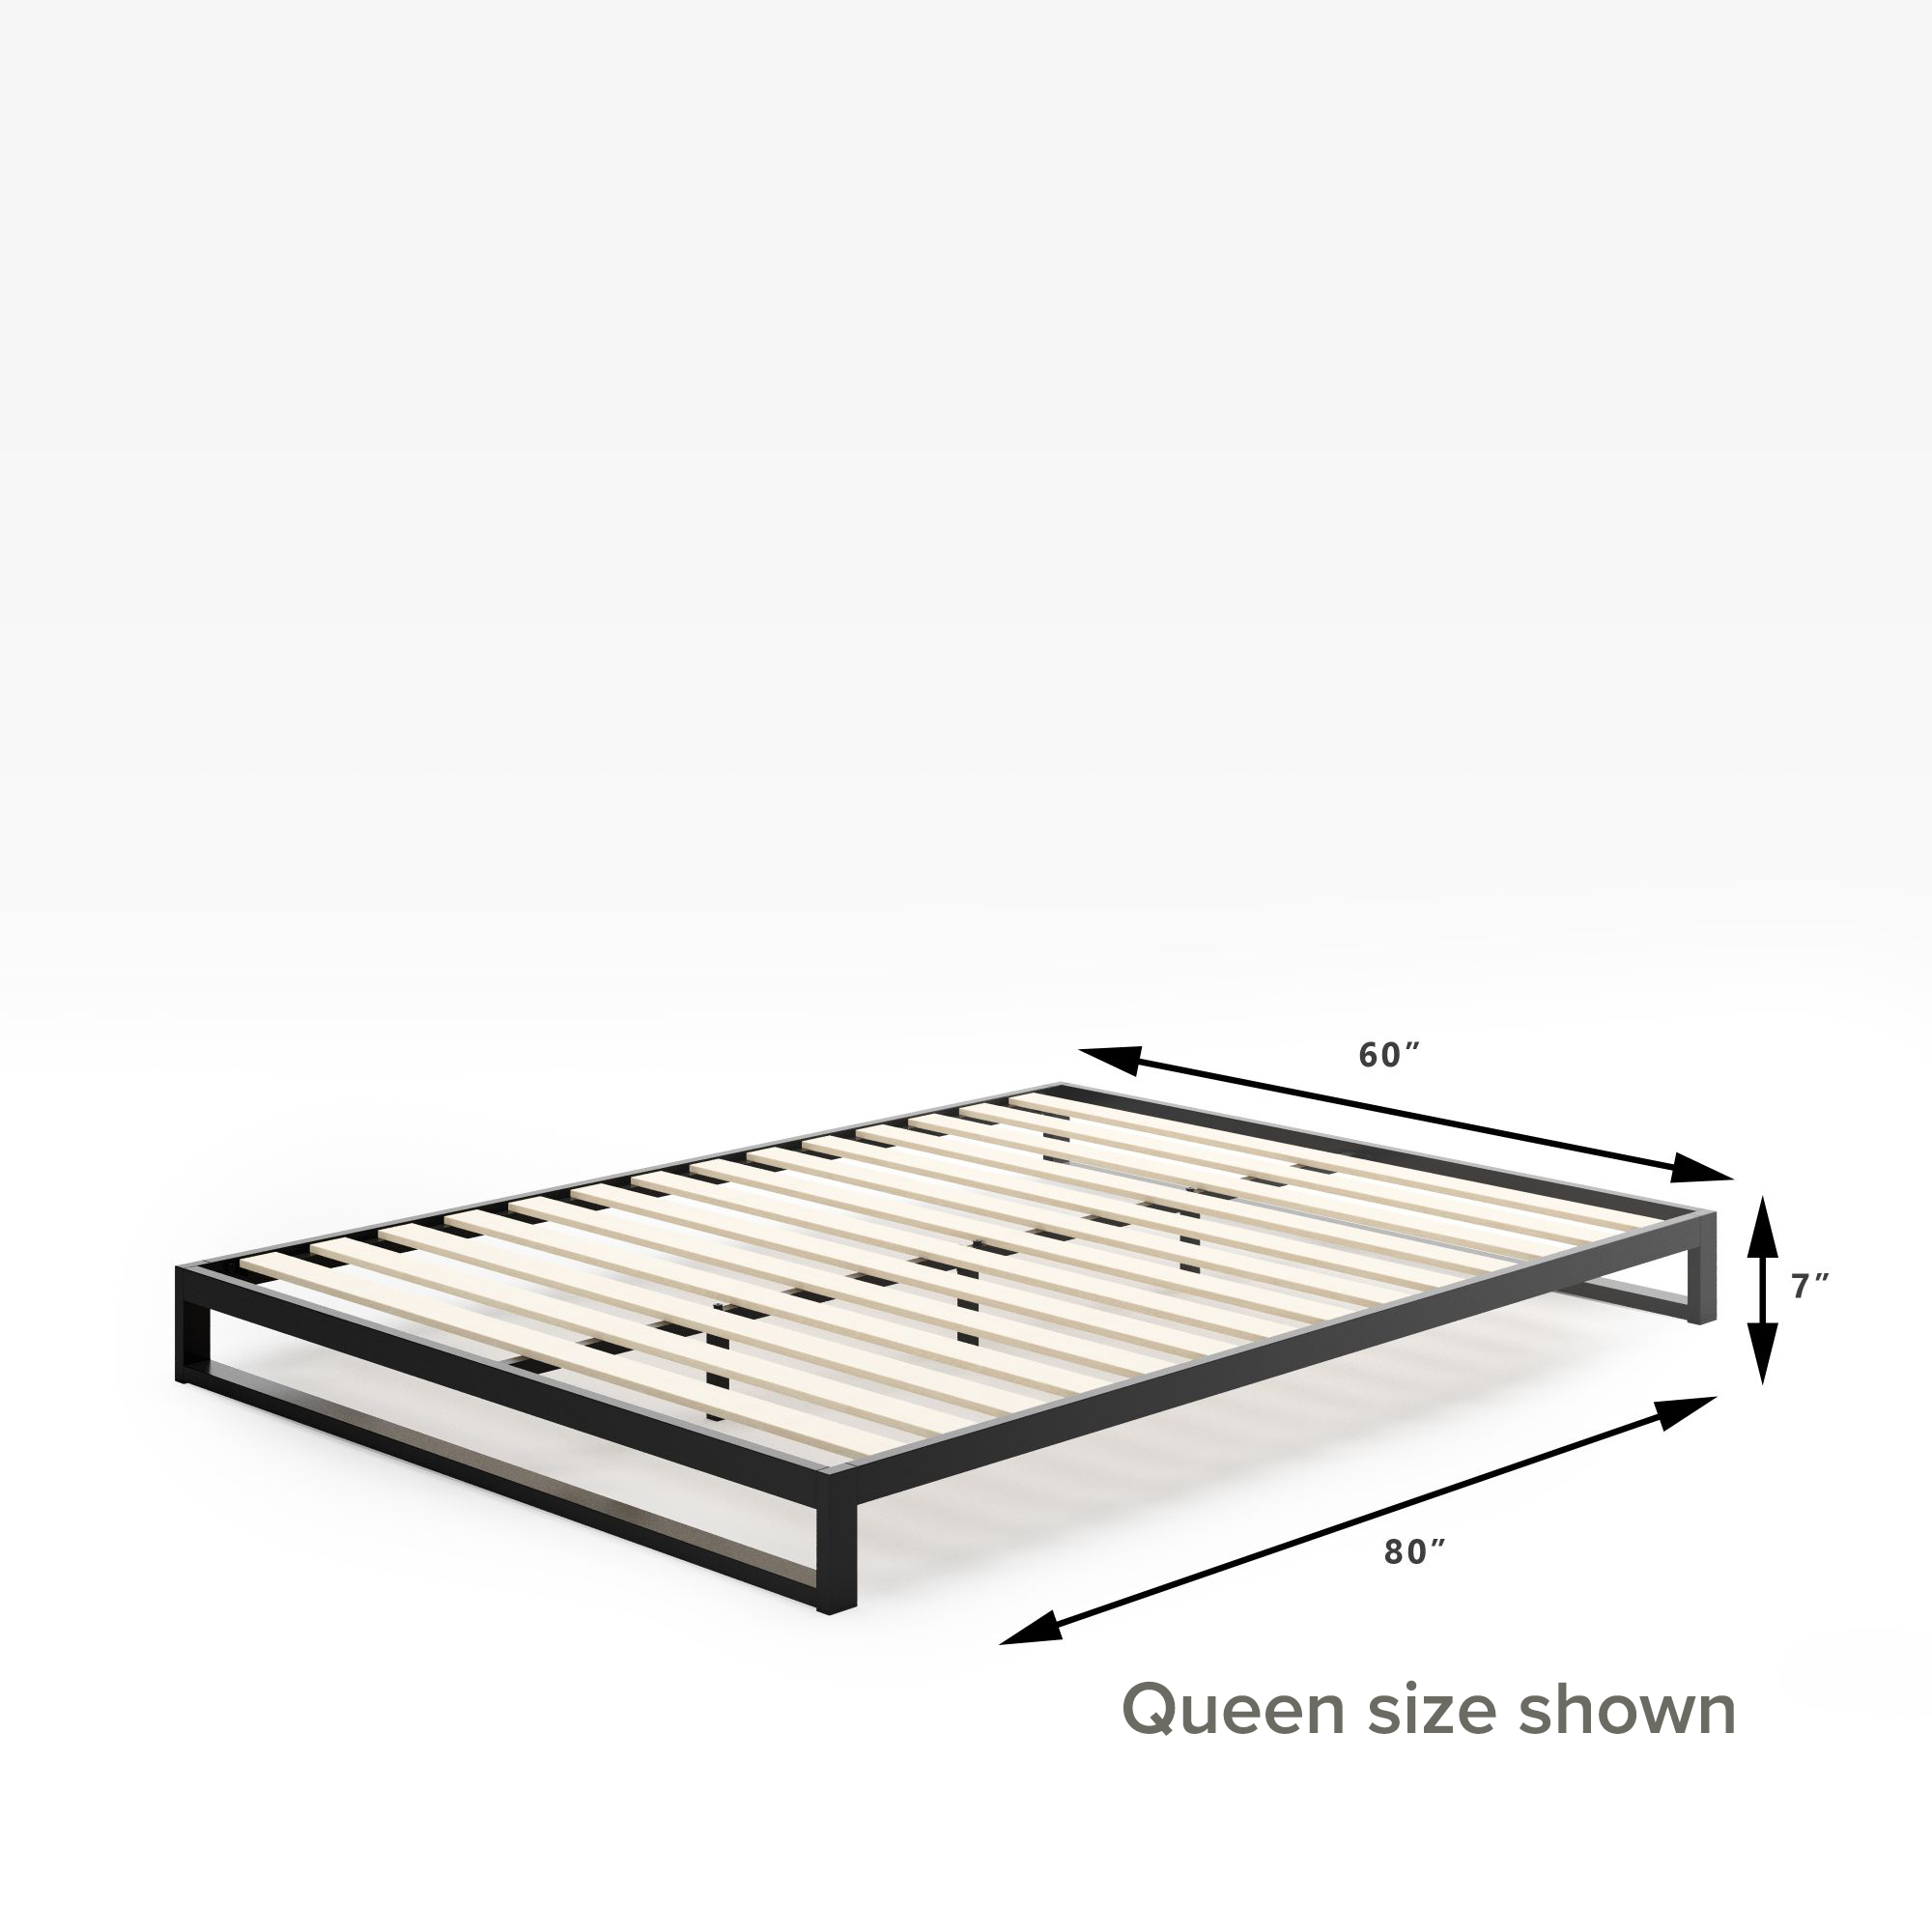 Trisha Metal Platforma Bed Frame queen size dimensions